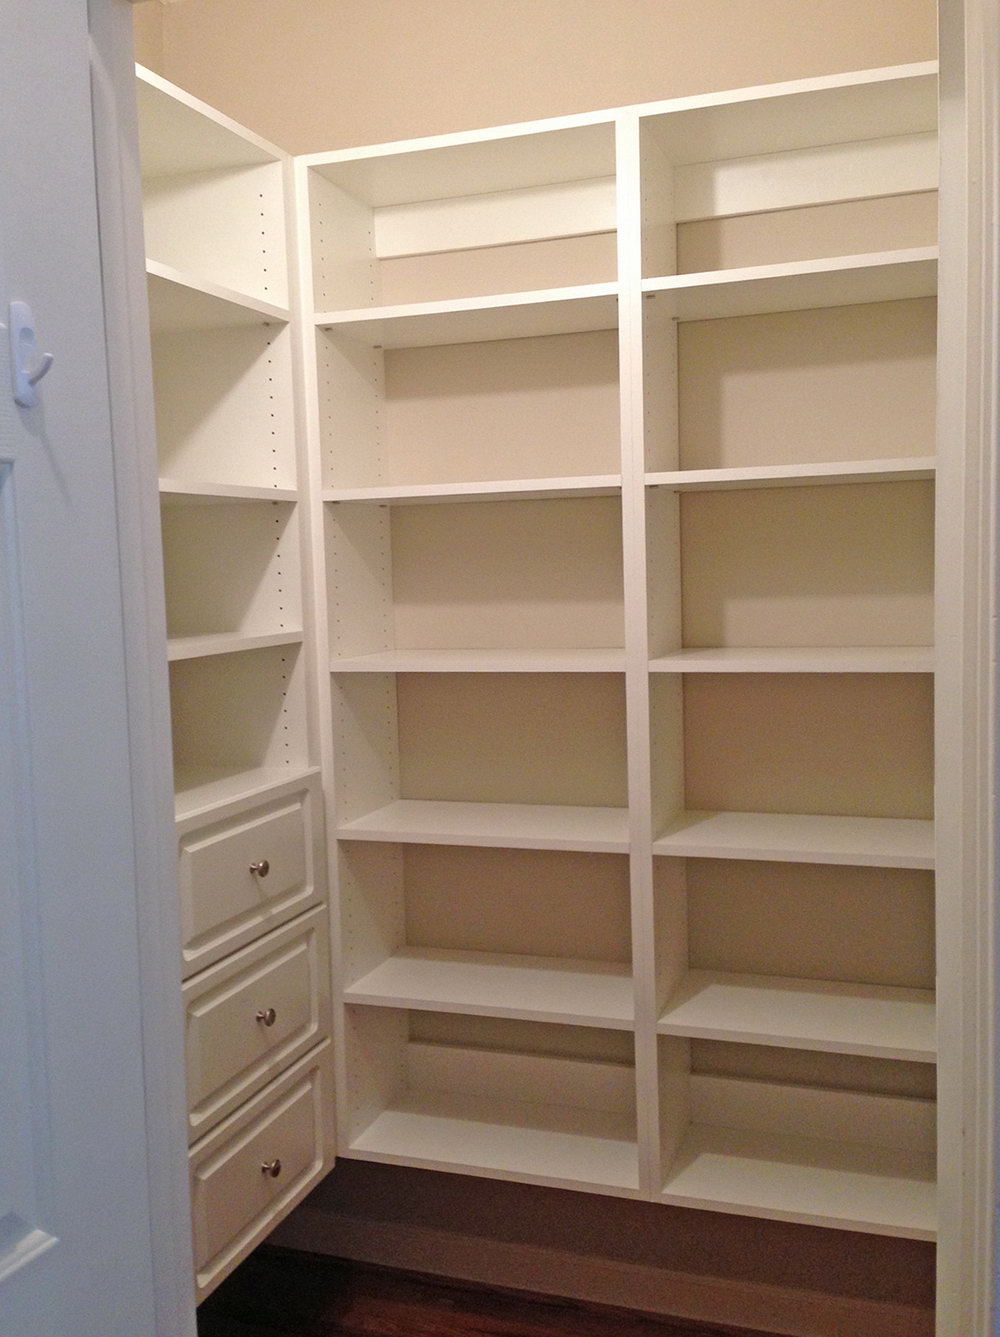 pantry closet shelving systems photo - 10